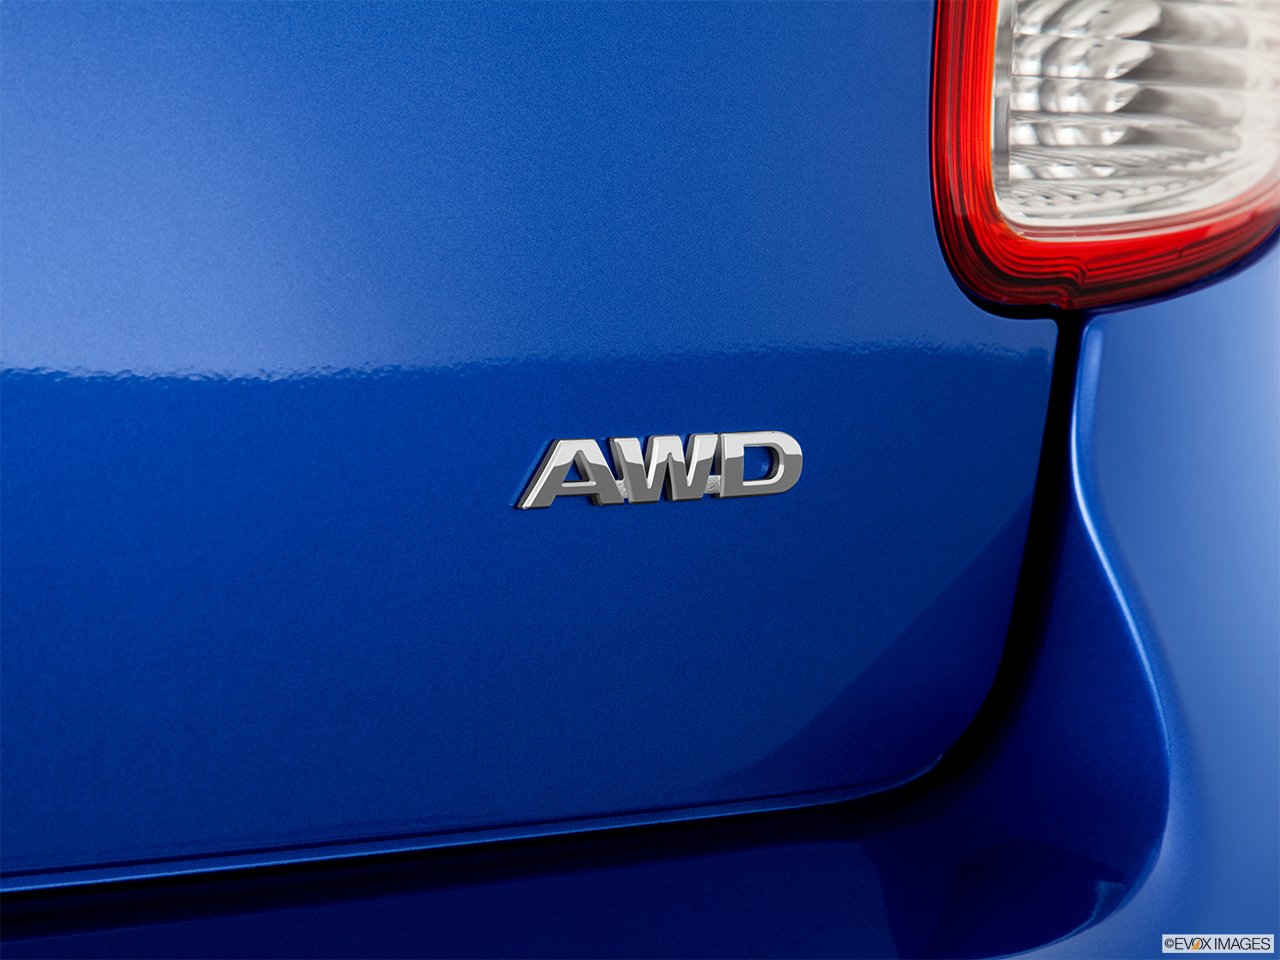 2013 Suzuki SX4 AWD Crossover Premium AT AWD Exterior Bonus Shots (no set spec) 